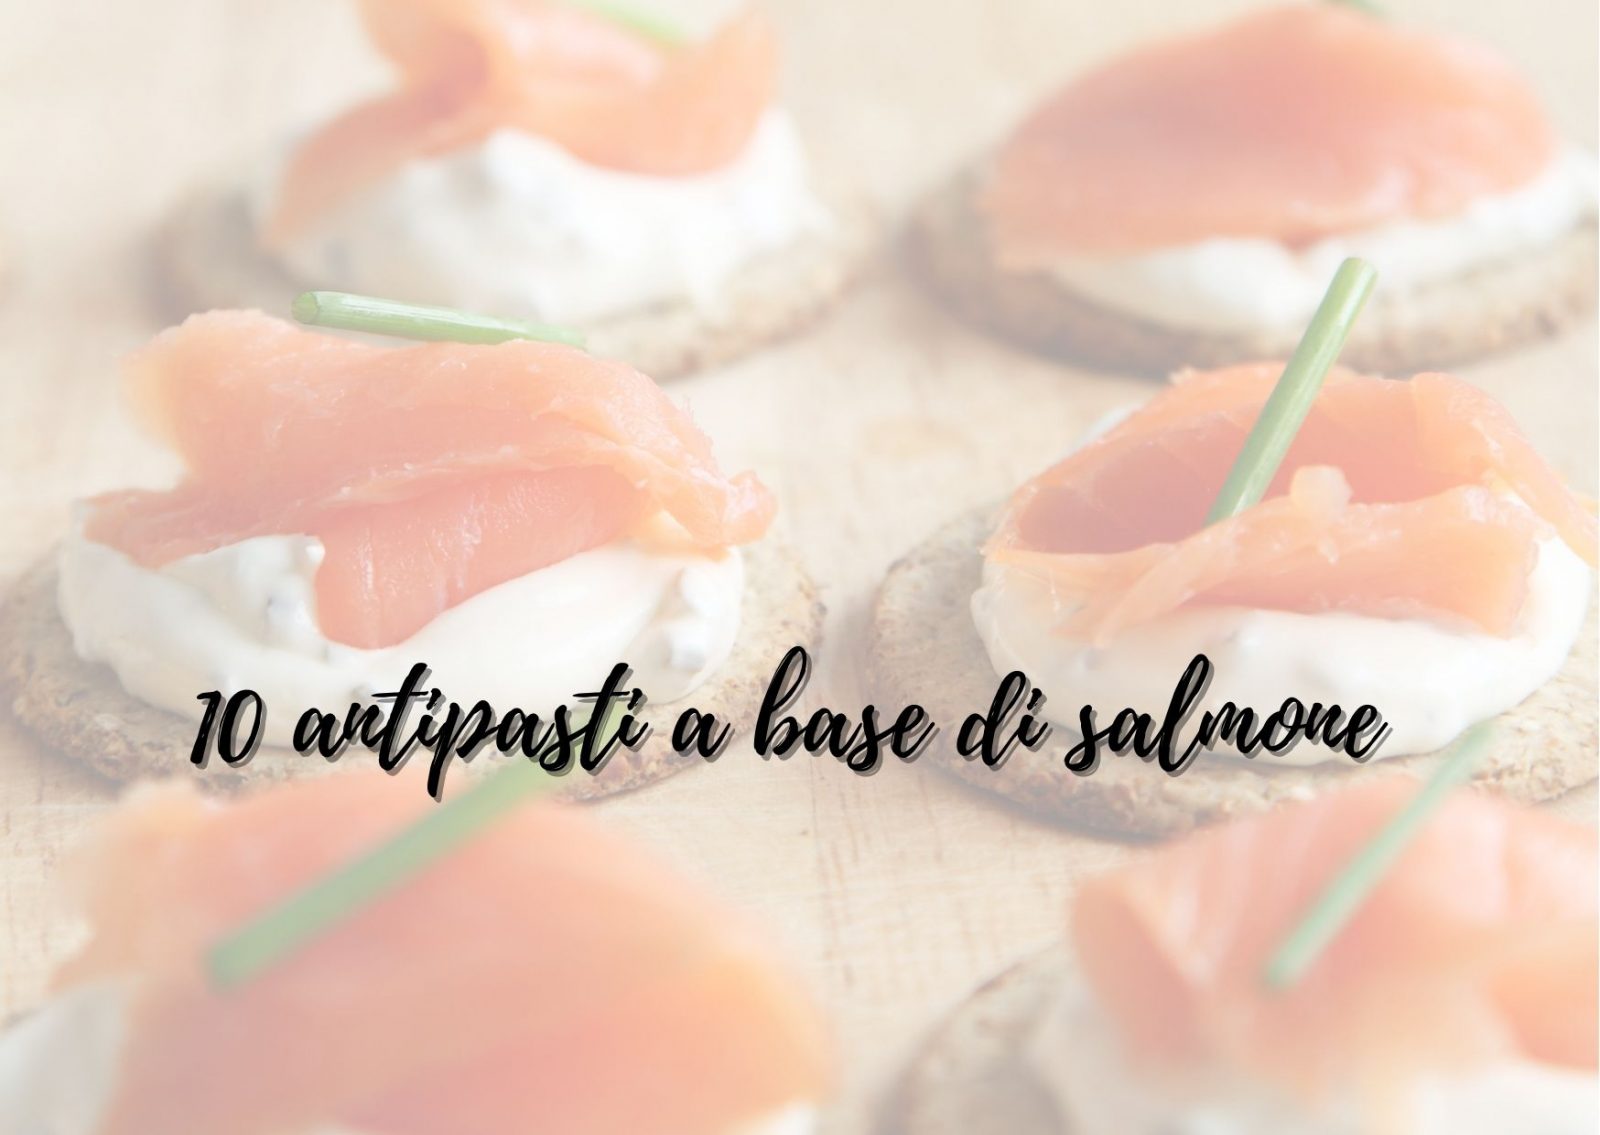 10 antipasti a base di salmone